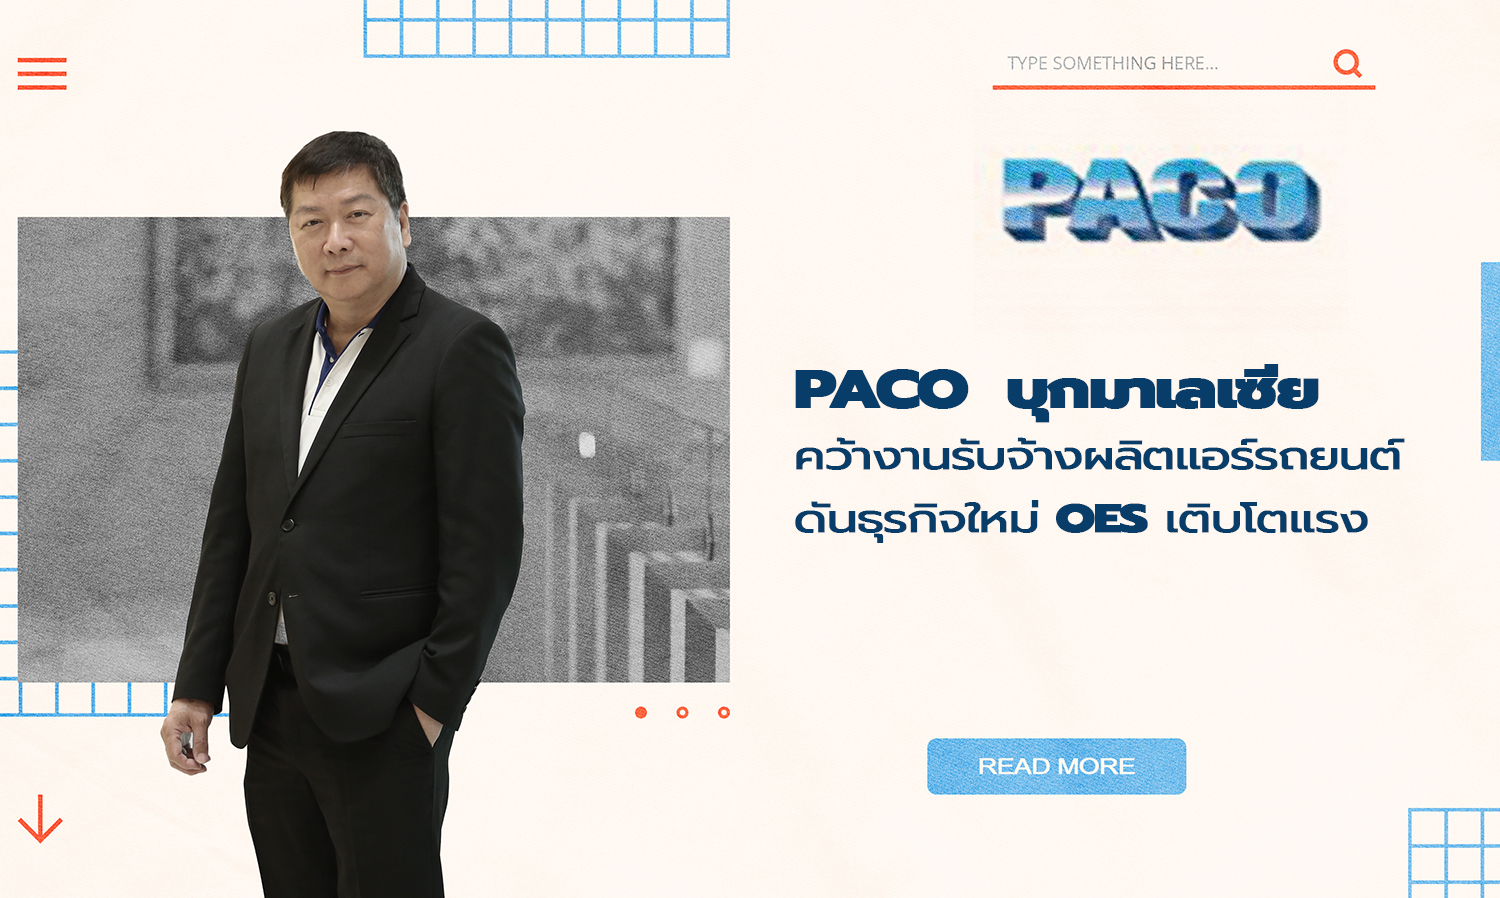 paco-บุกมาเลเซีย-คว้างานรับจ้างผลิตแอร์รถยนต์-ดันธุรกิจใหม่-oes-เติบโตแรง